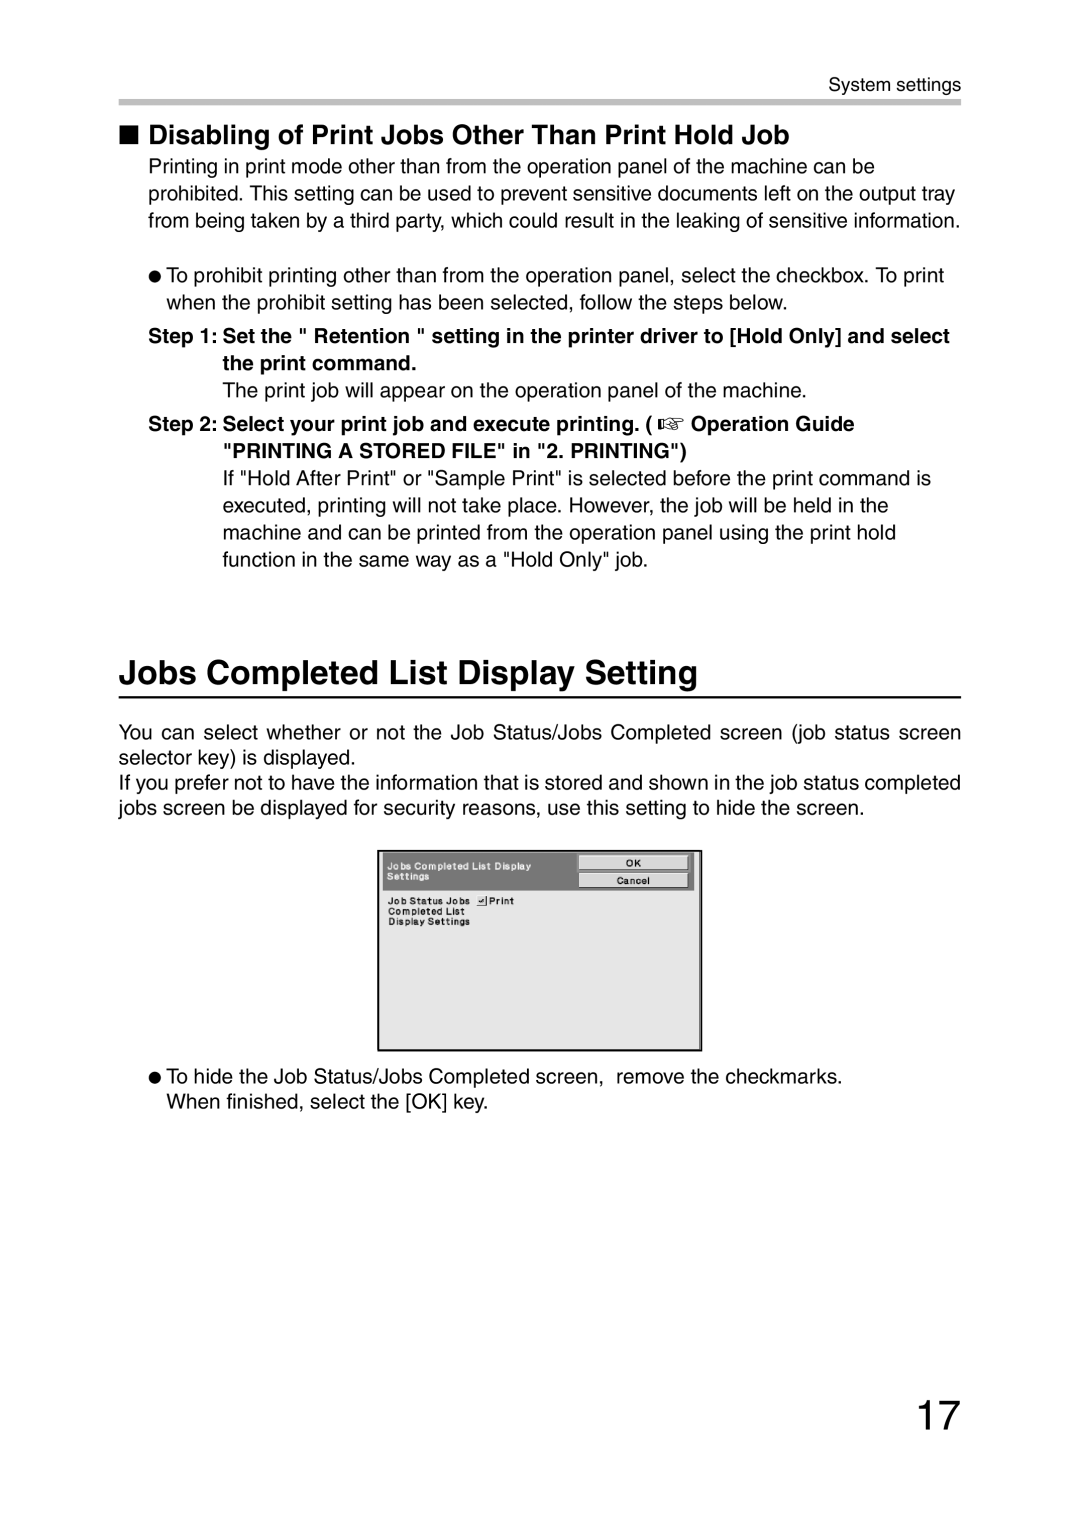 Sharp MX-FR20U, MX-FR21U manual Jobs Completed List Display Setting, Disabling of Print Jobs Other Than Print Hold Job 